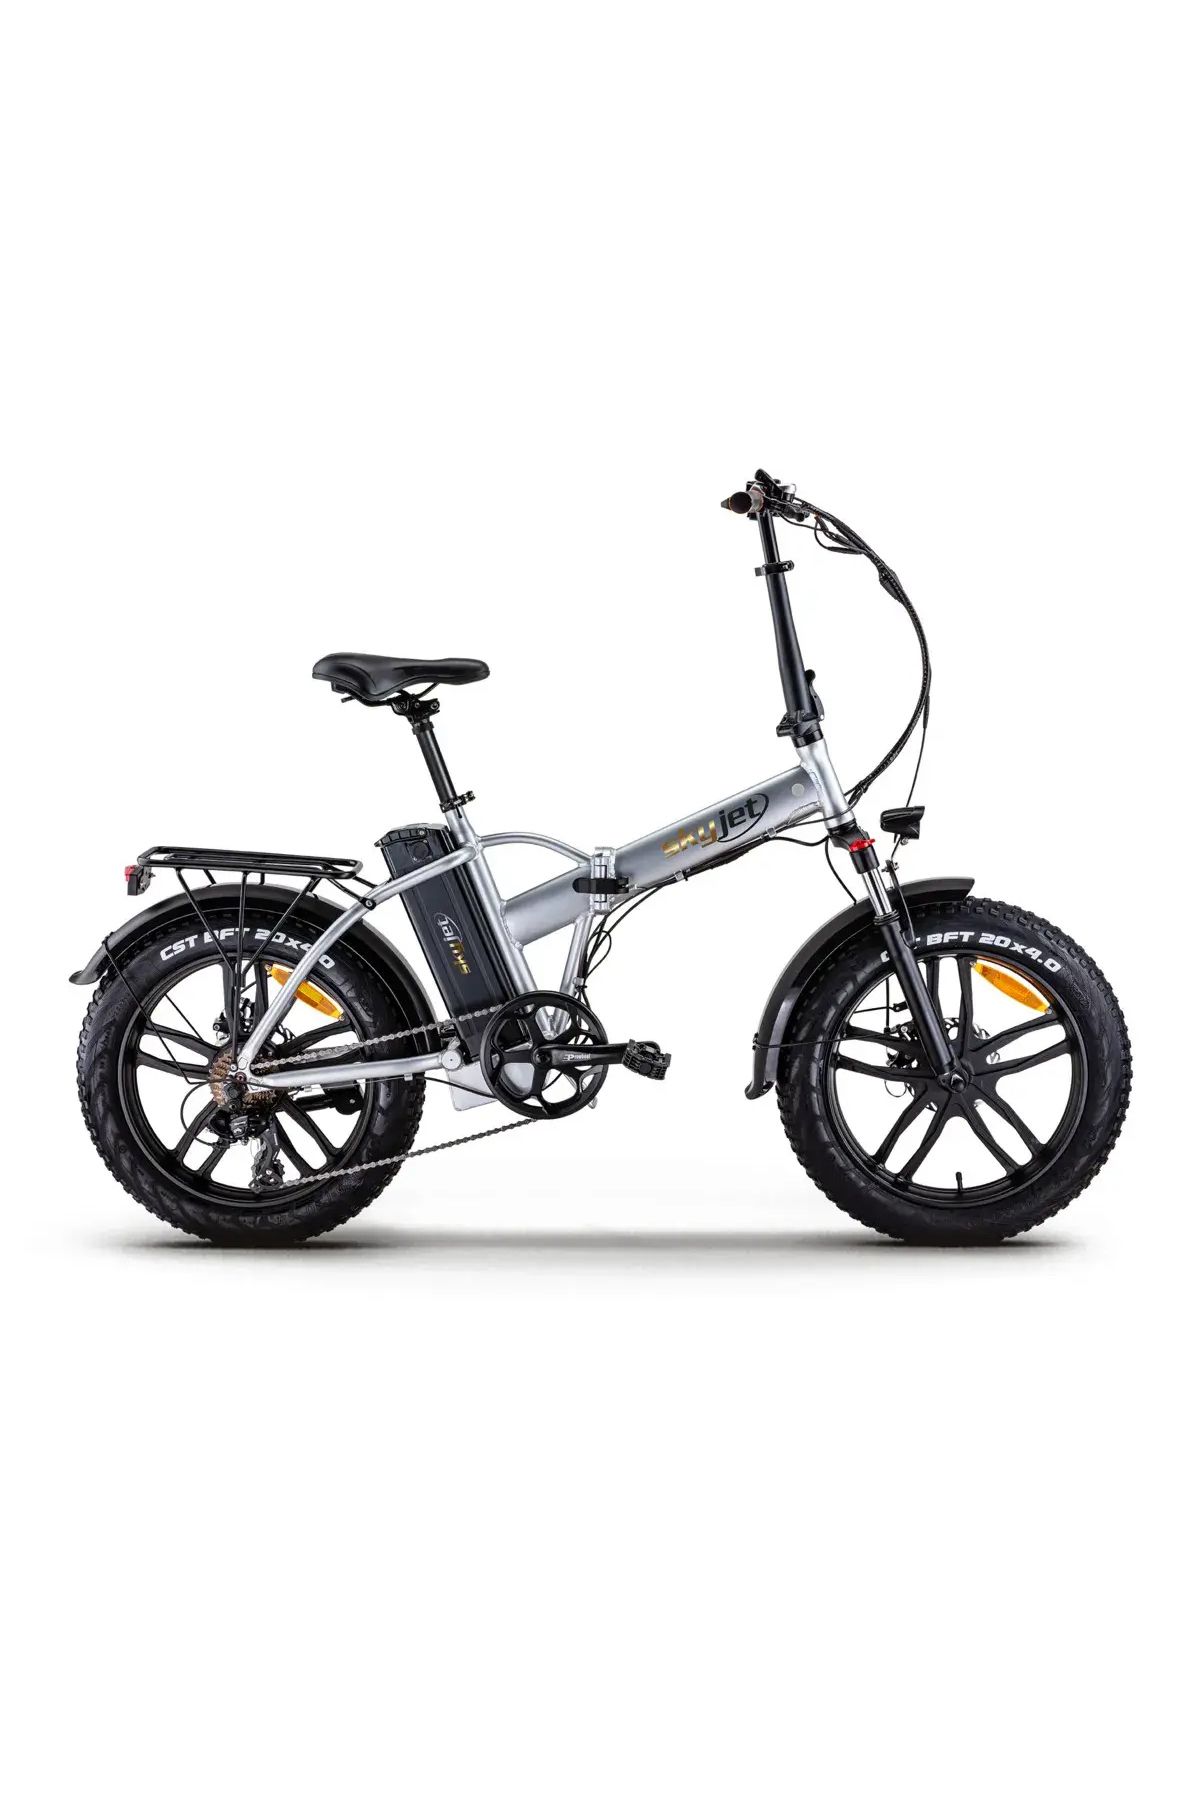 RKS Skyjet Rs 3 Pro Katlanır Kalın Tekerlekli Elektrikli Bisiklet